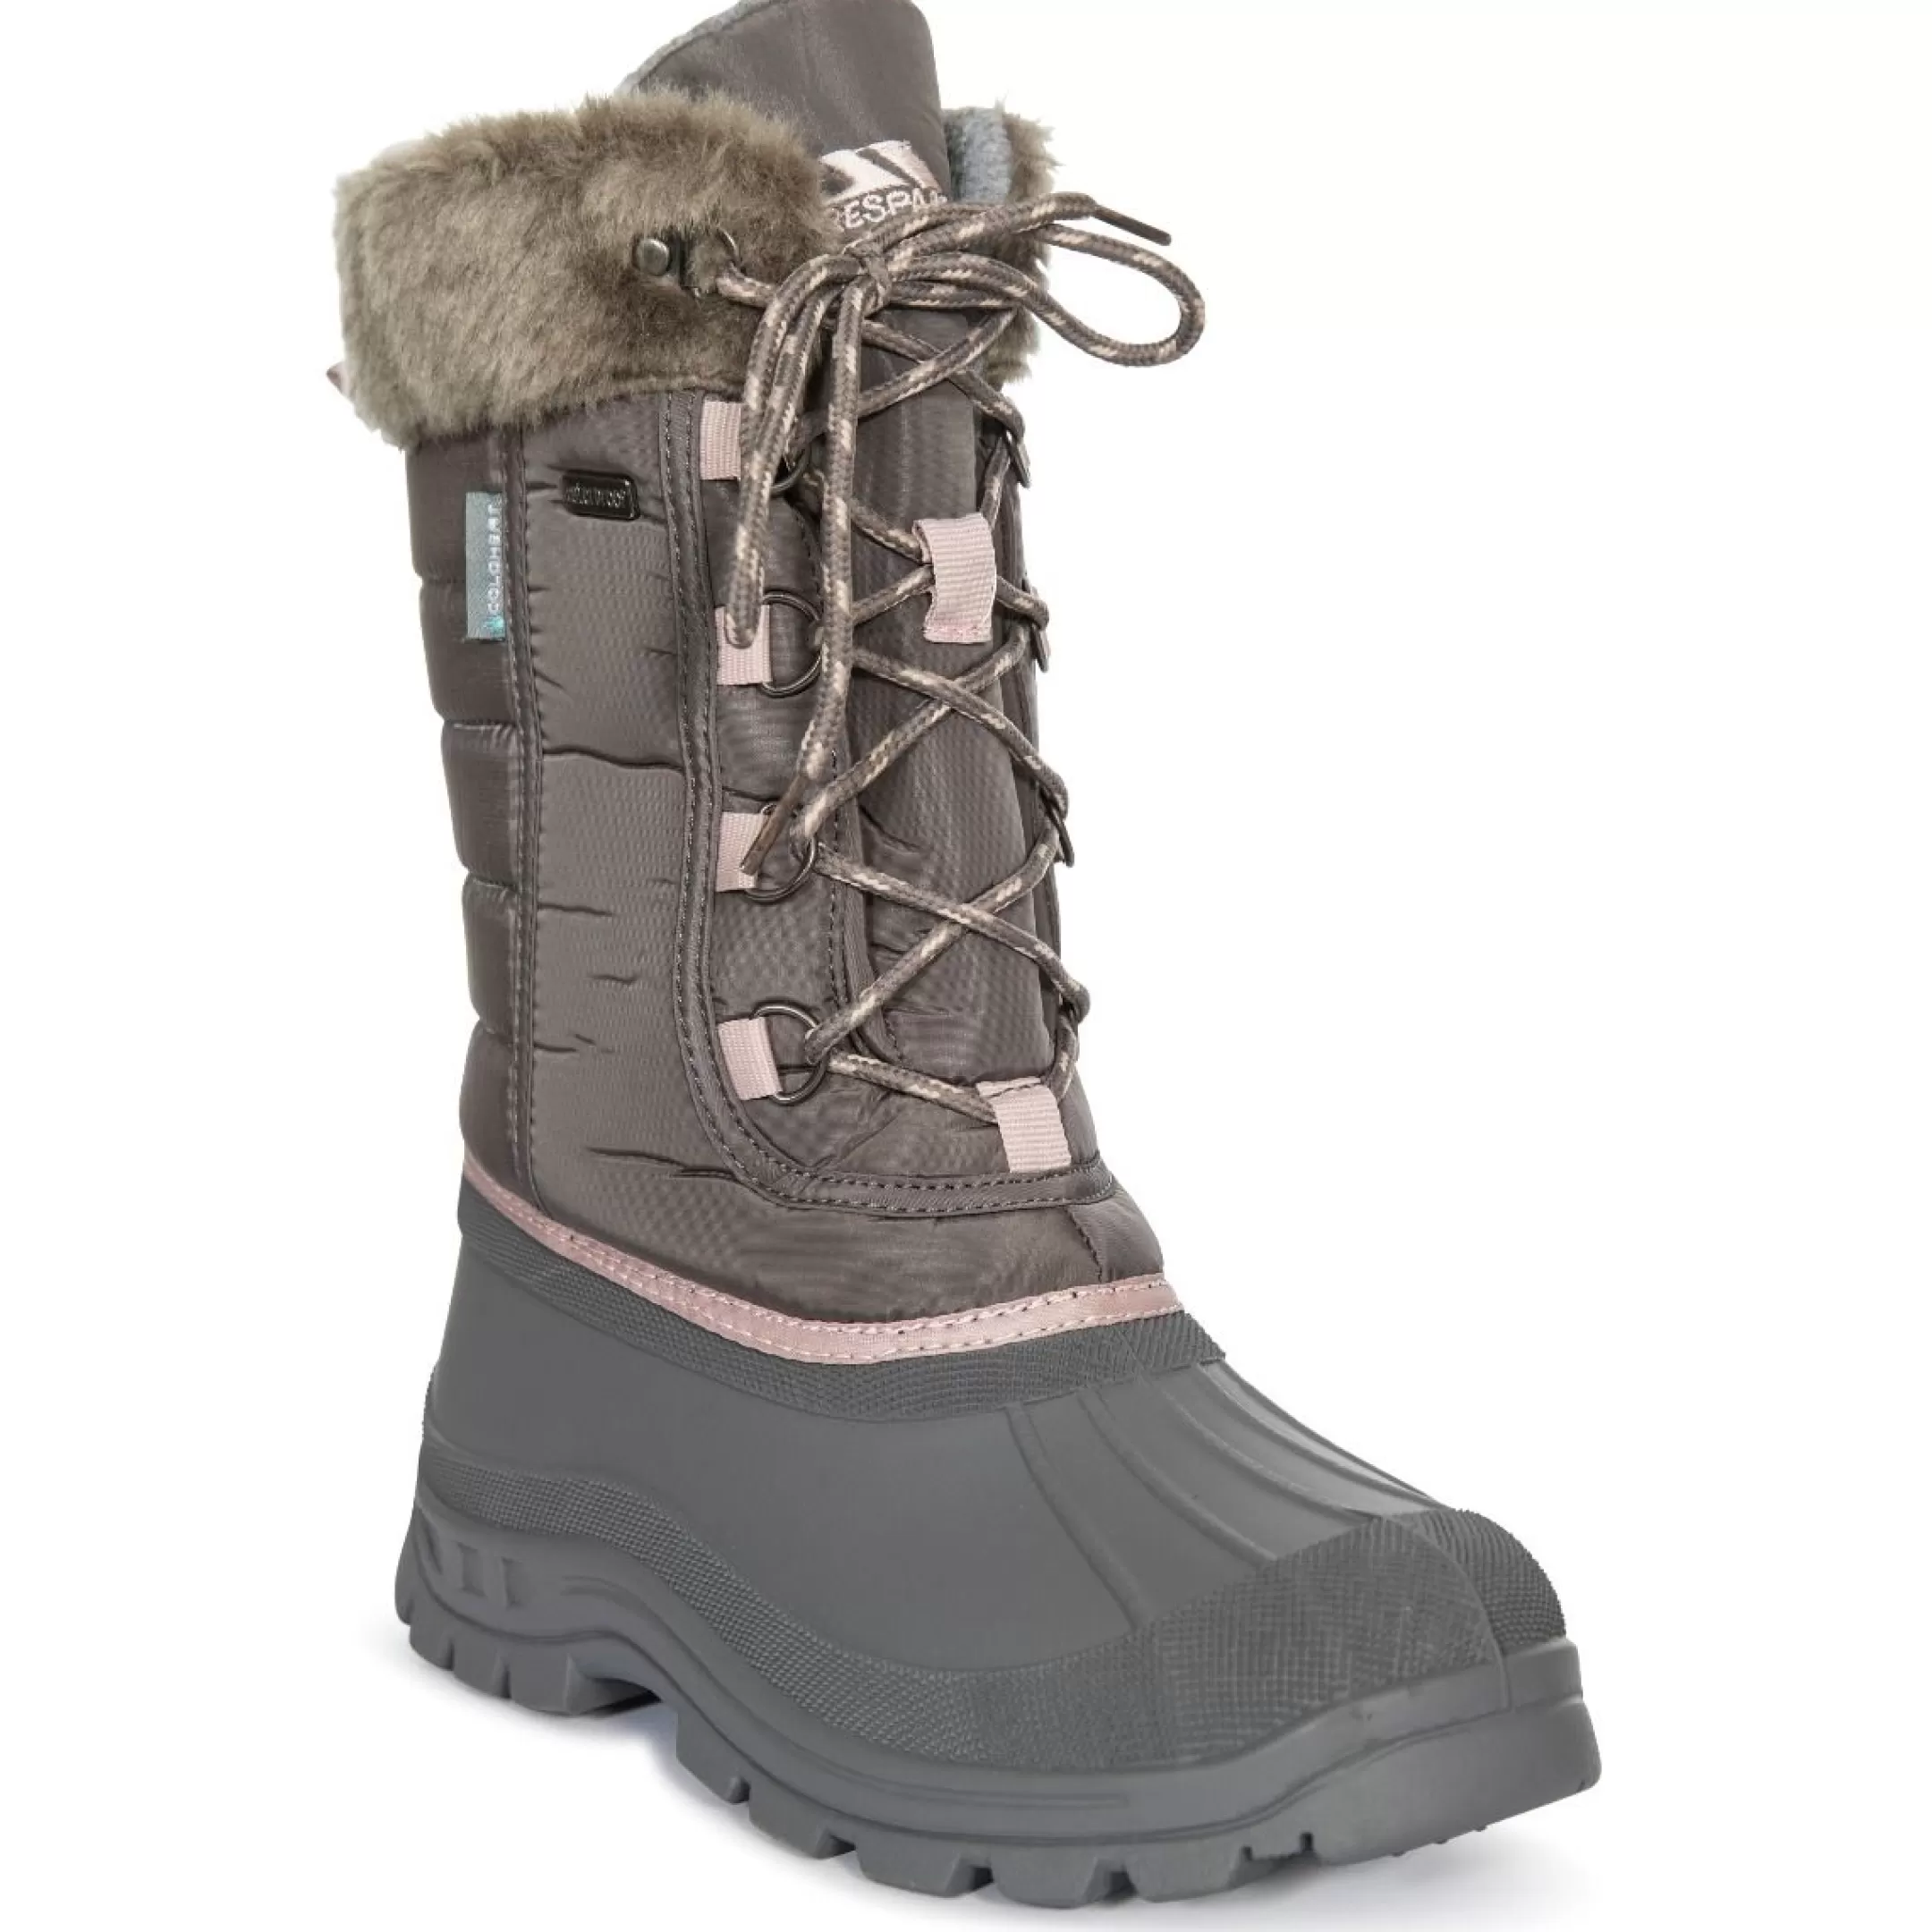 Womens Insulated Waterproof Snow Boots Stavra II | Trespass Store